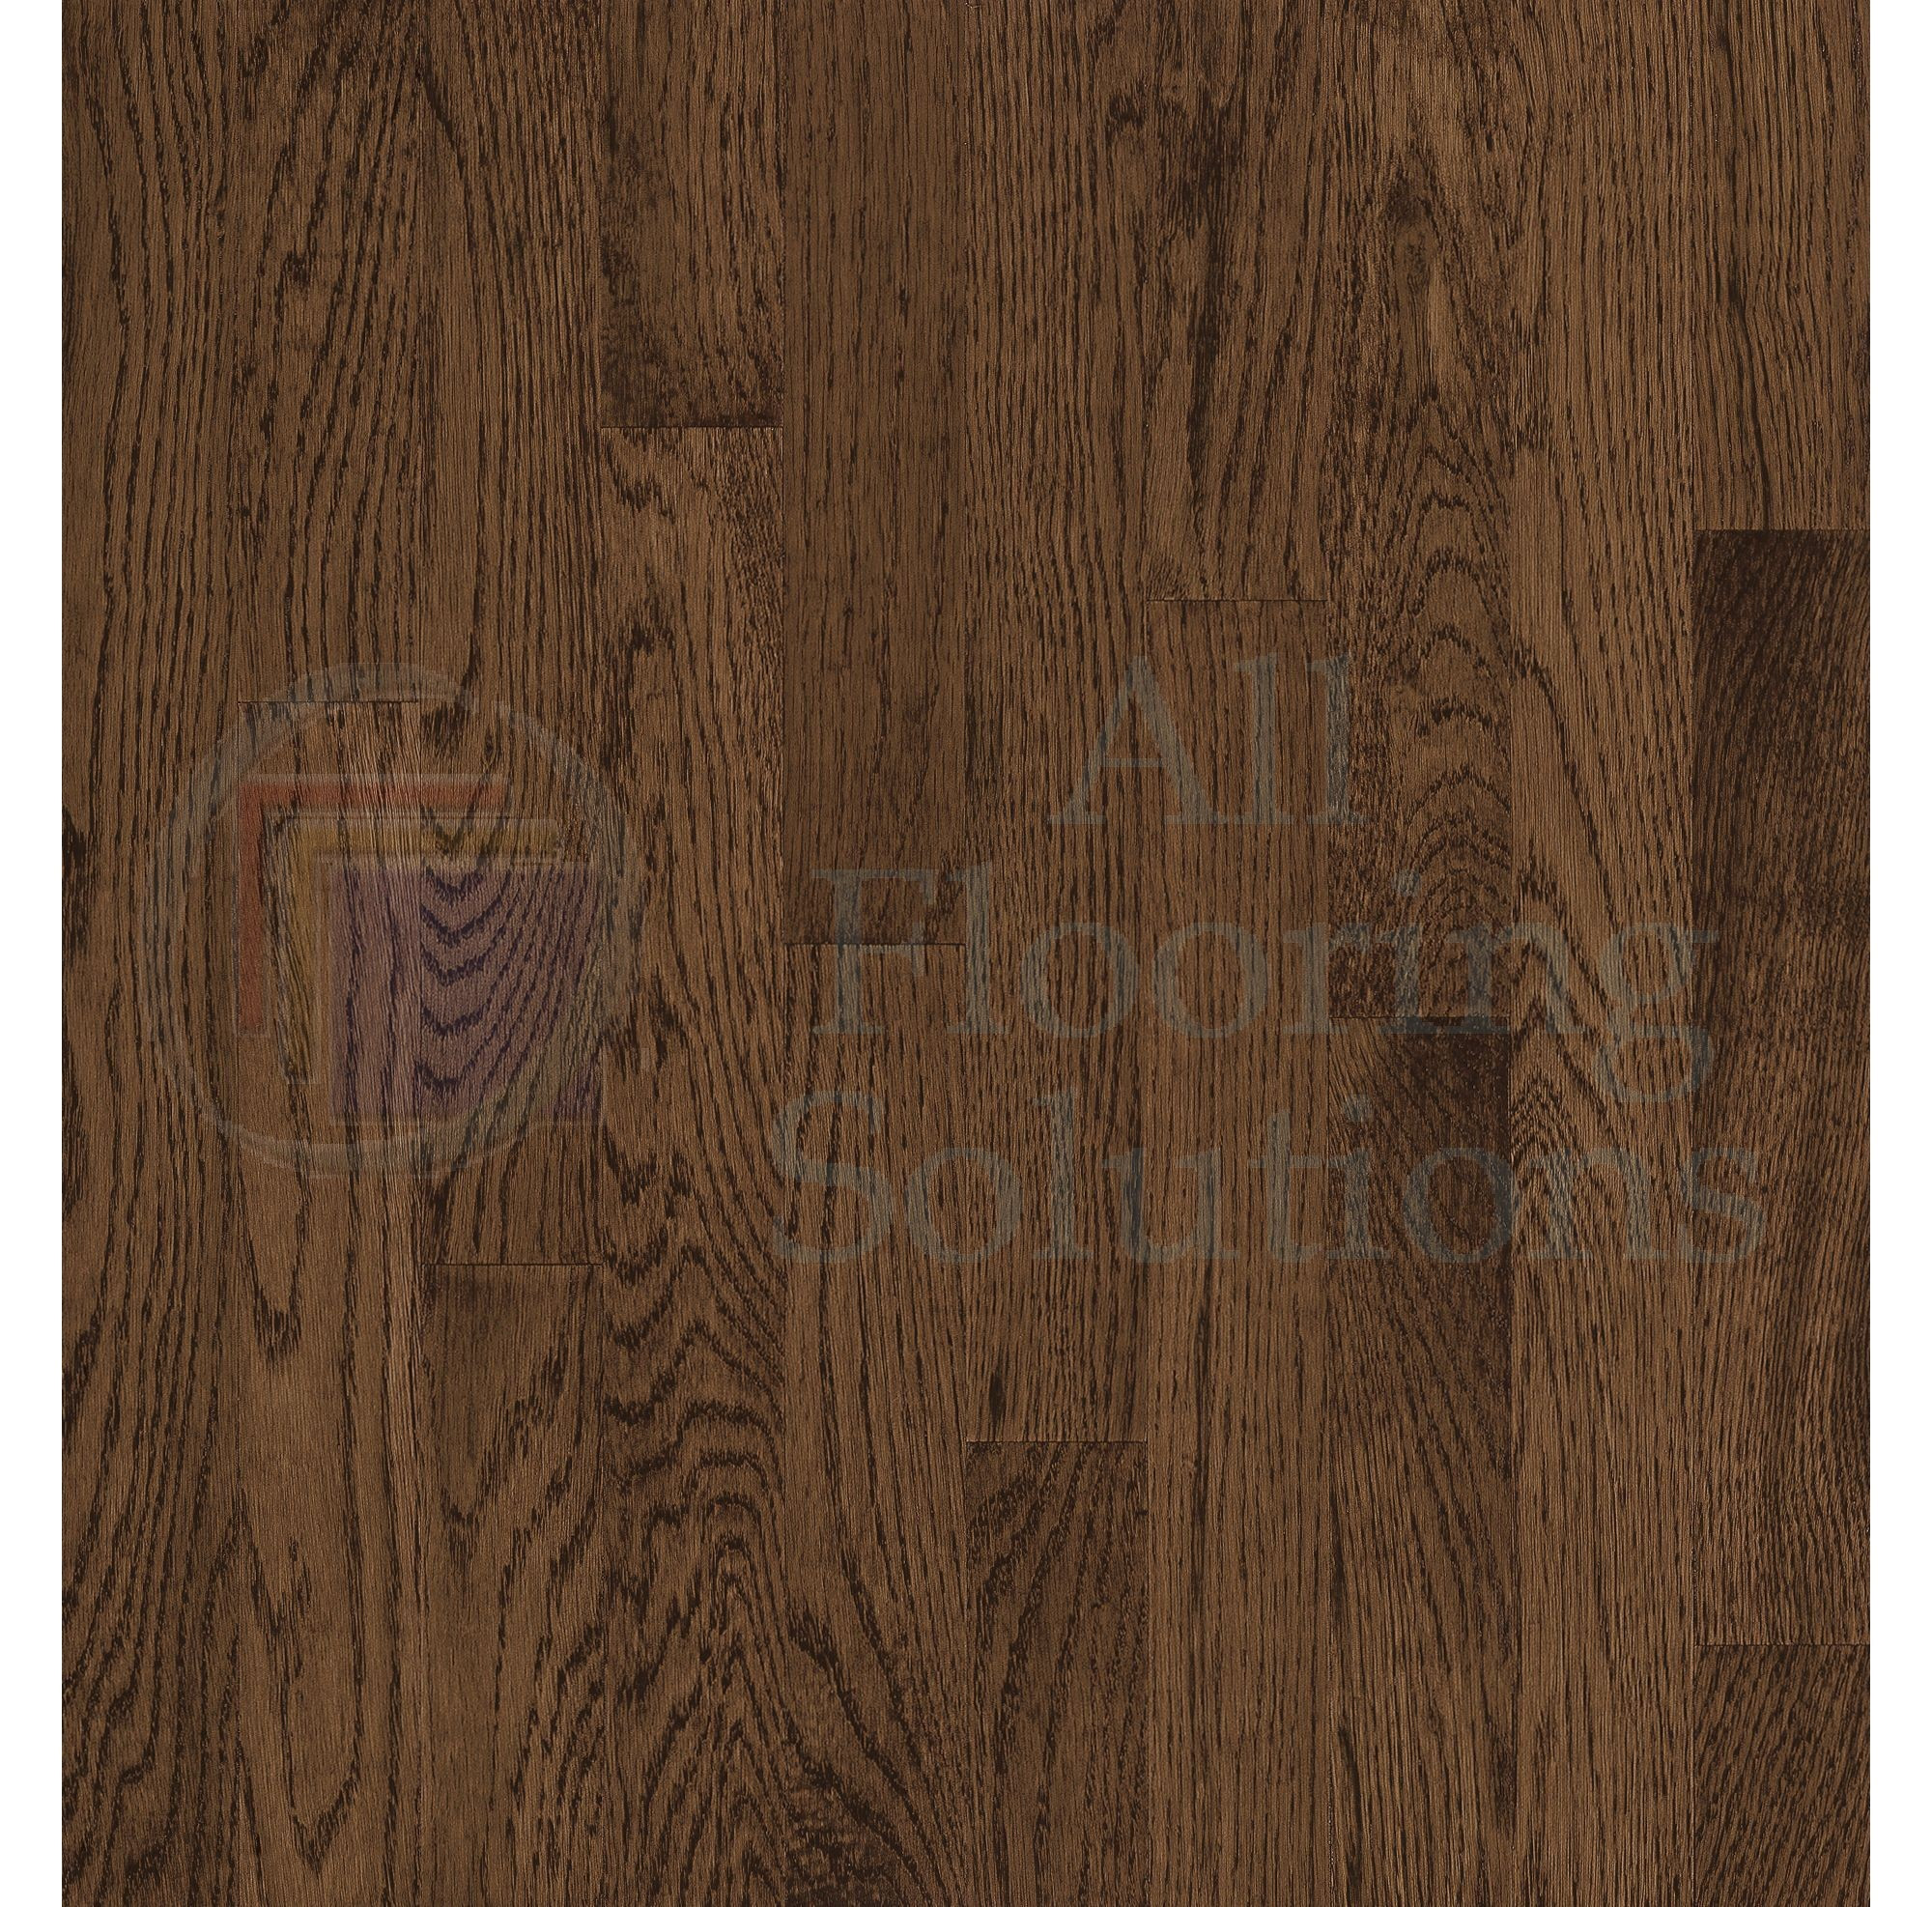 20 Perfect 2 Oak Hardwood Flooring 2024 free download 2 oak hardwood flooring of white oak hardwood flooring for sale gallery of wood and tile regarding imported exotic hardwood flooring lowest price bruce hardwood floors